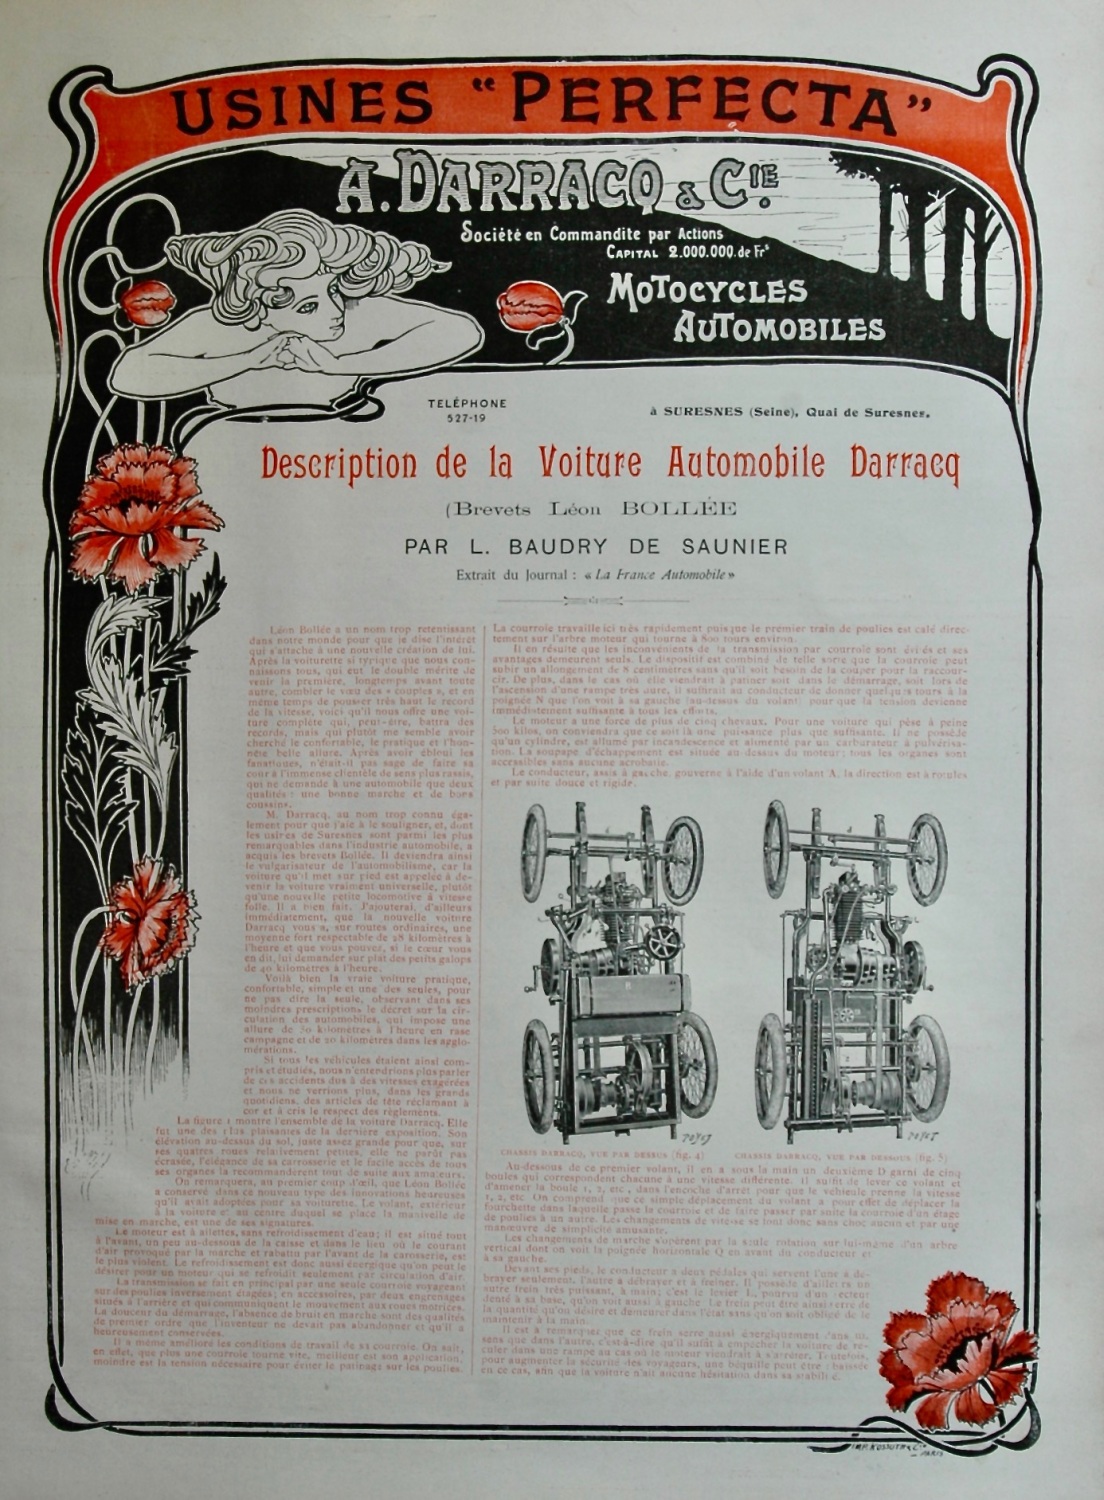 A Darracq & Cie.   (Motorcycles, Automobiles) 1899.